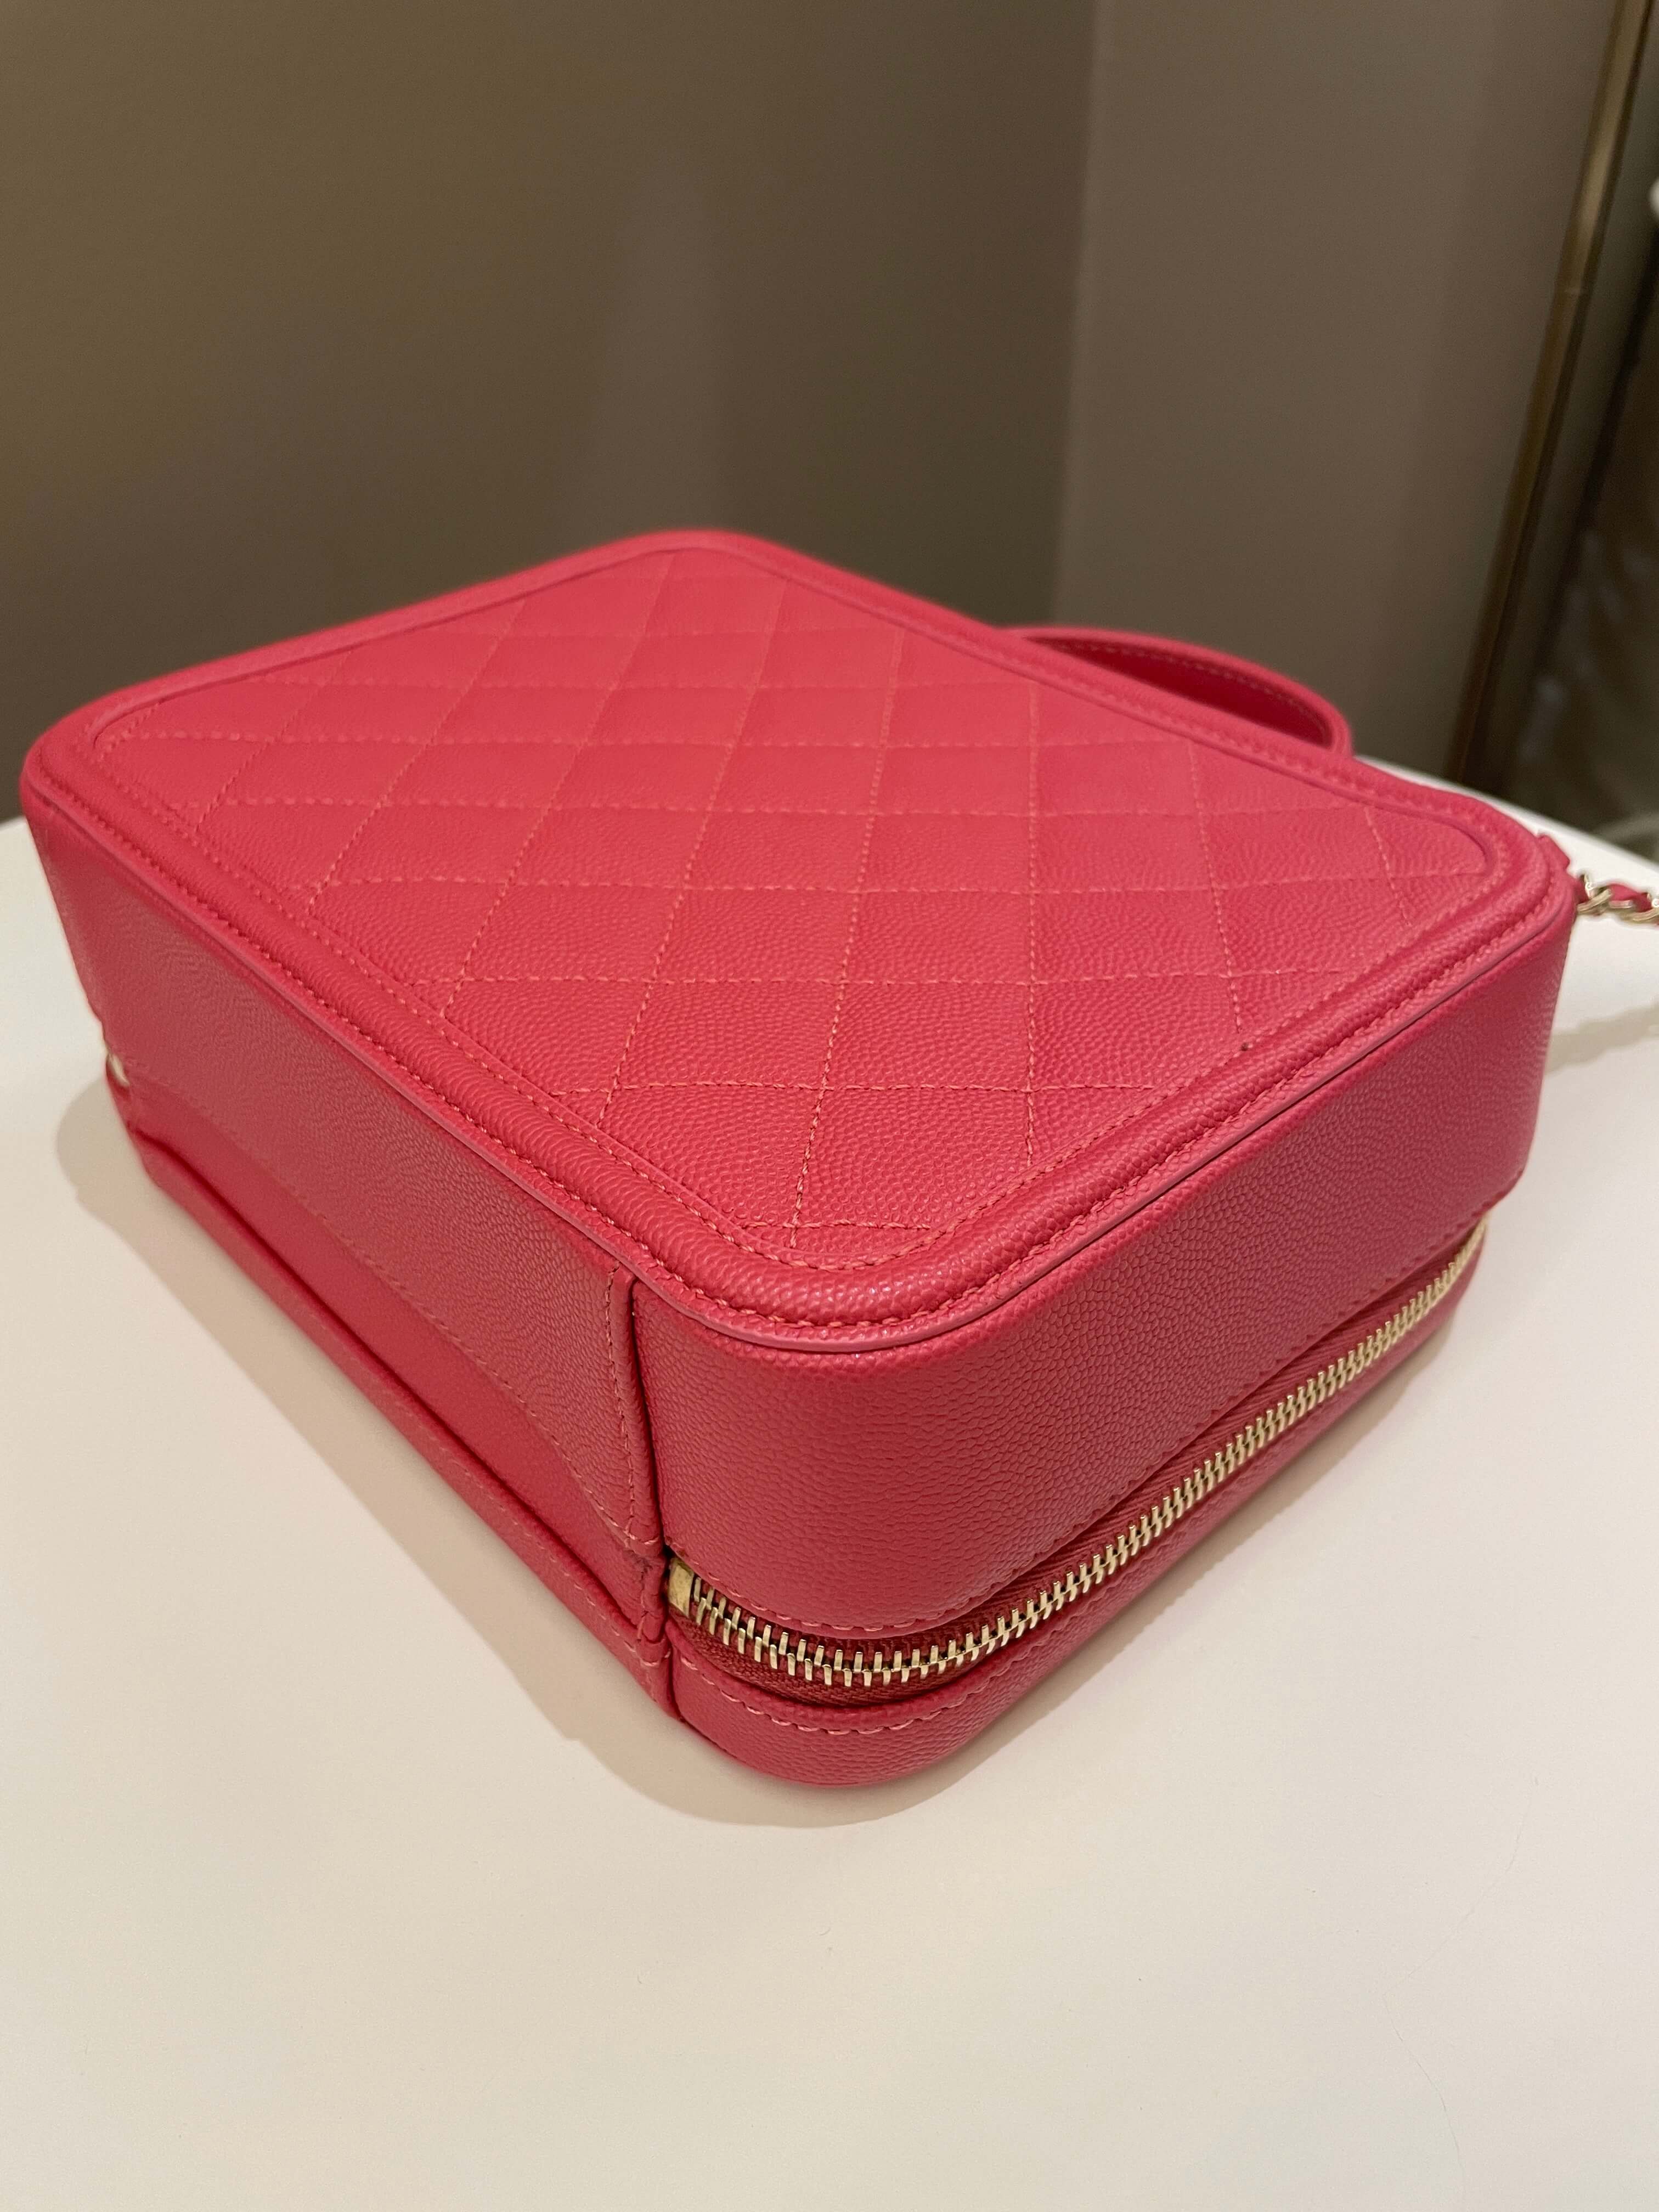 Chanel Filigree Vanity Case Pink Caviar